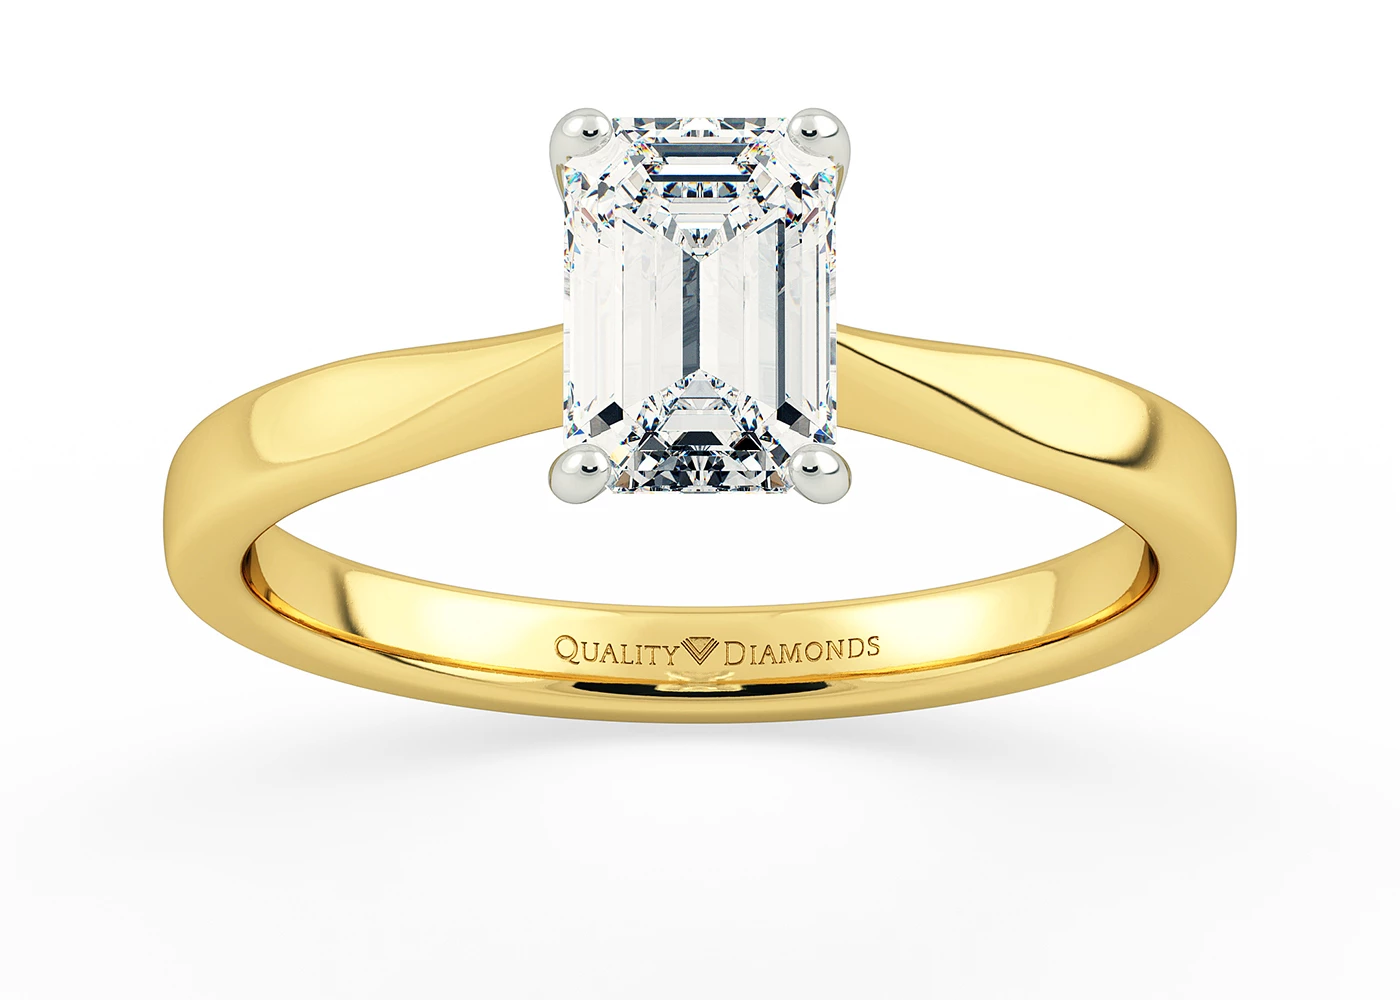 Emerald Beau Diamond Ring in 18K Yellow Gold